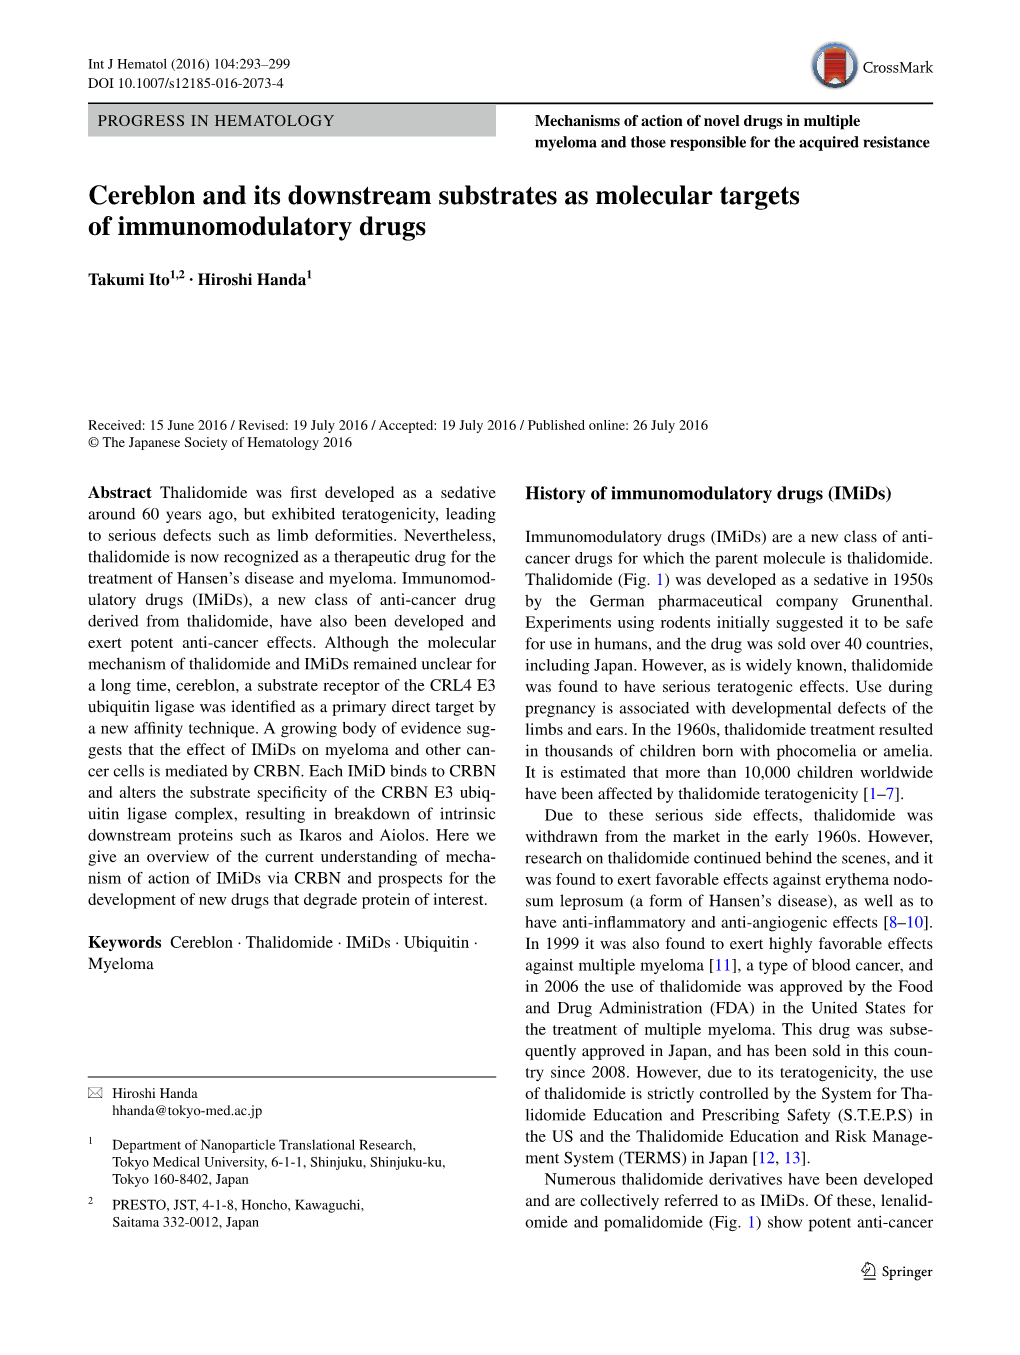 Cereblon and Its Downstream Substrates As Molecular Targets of Immunomodulatory Drugs